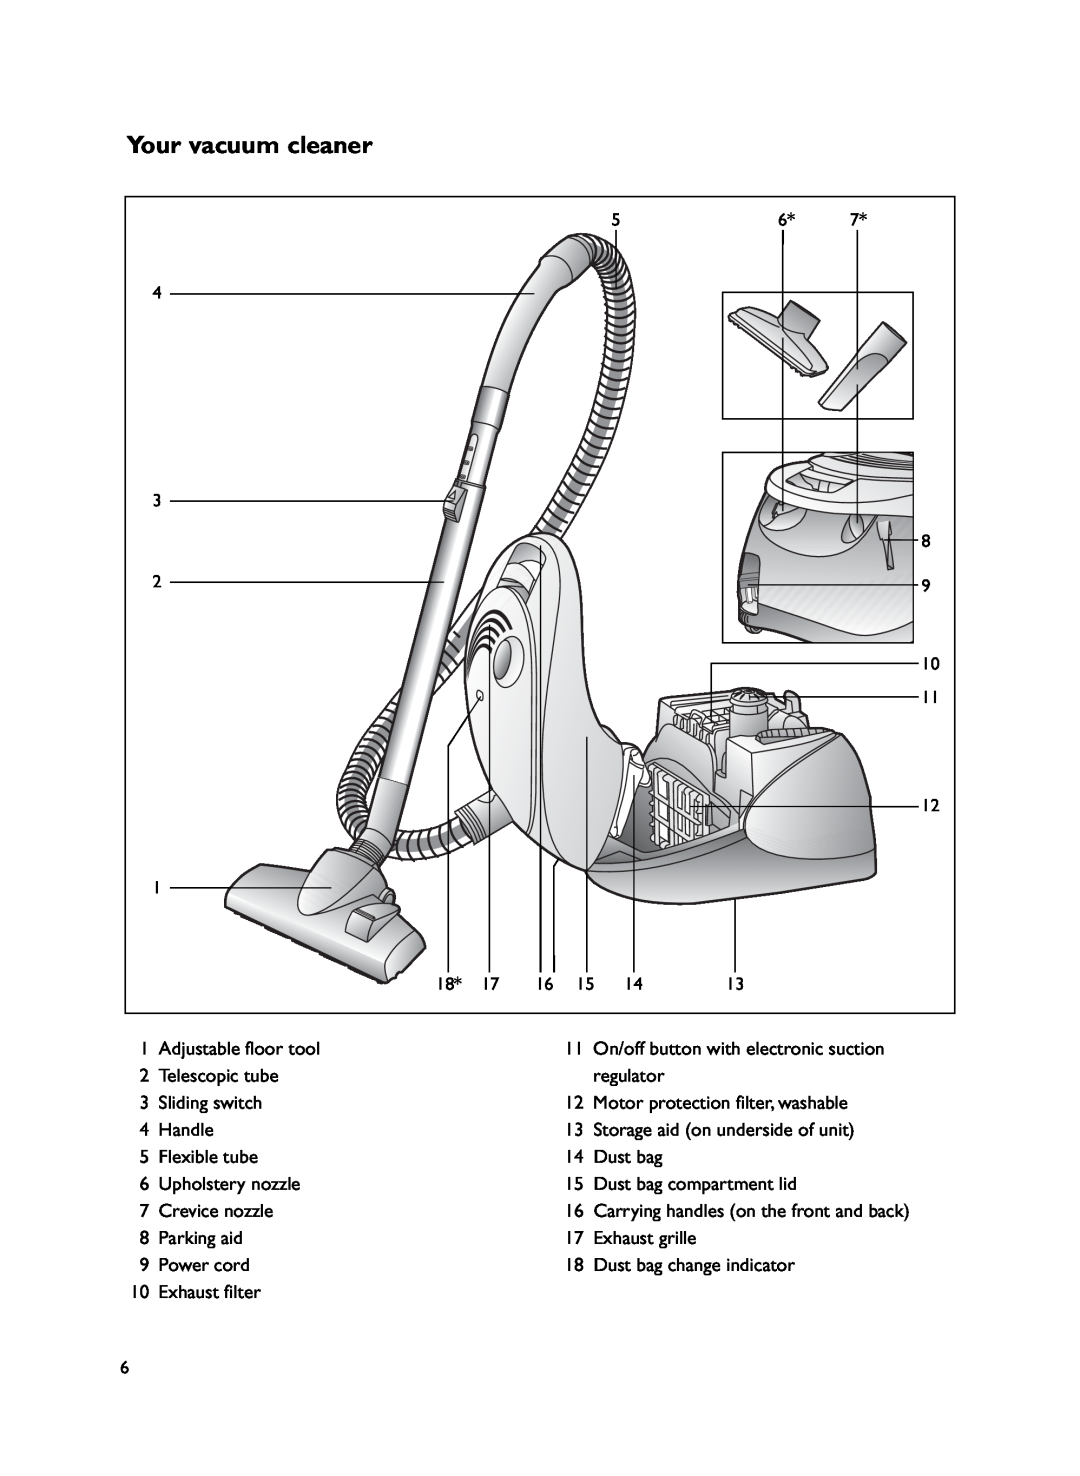 John Lewis JLVS06 instruction manual Your vacuum cleaner 